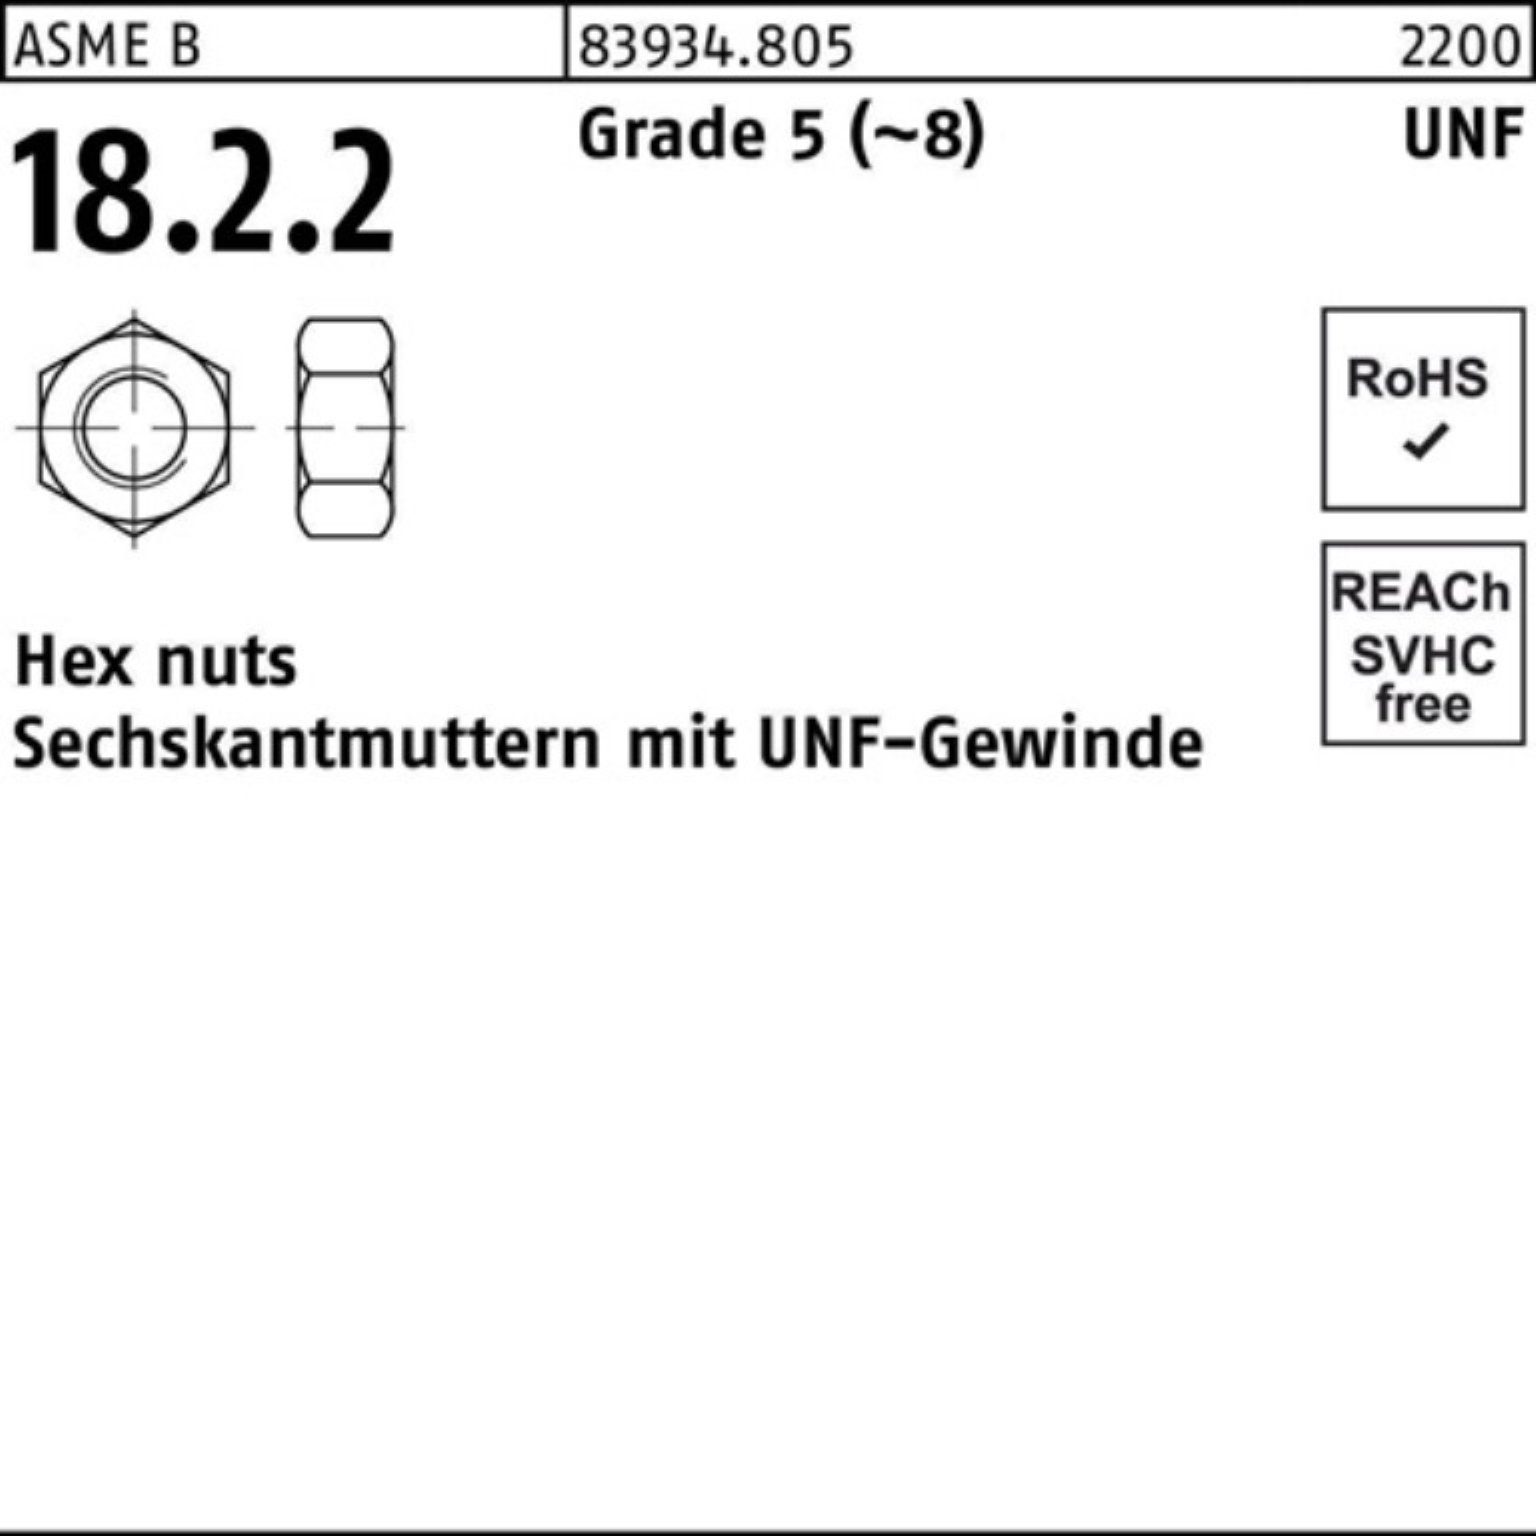 Reyher Muttern 100er Pack 25 Sechskantmutter 7/8 St 83934 (8) Grade UNF-Gewinde R 5